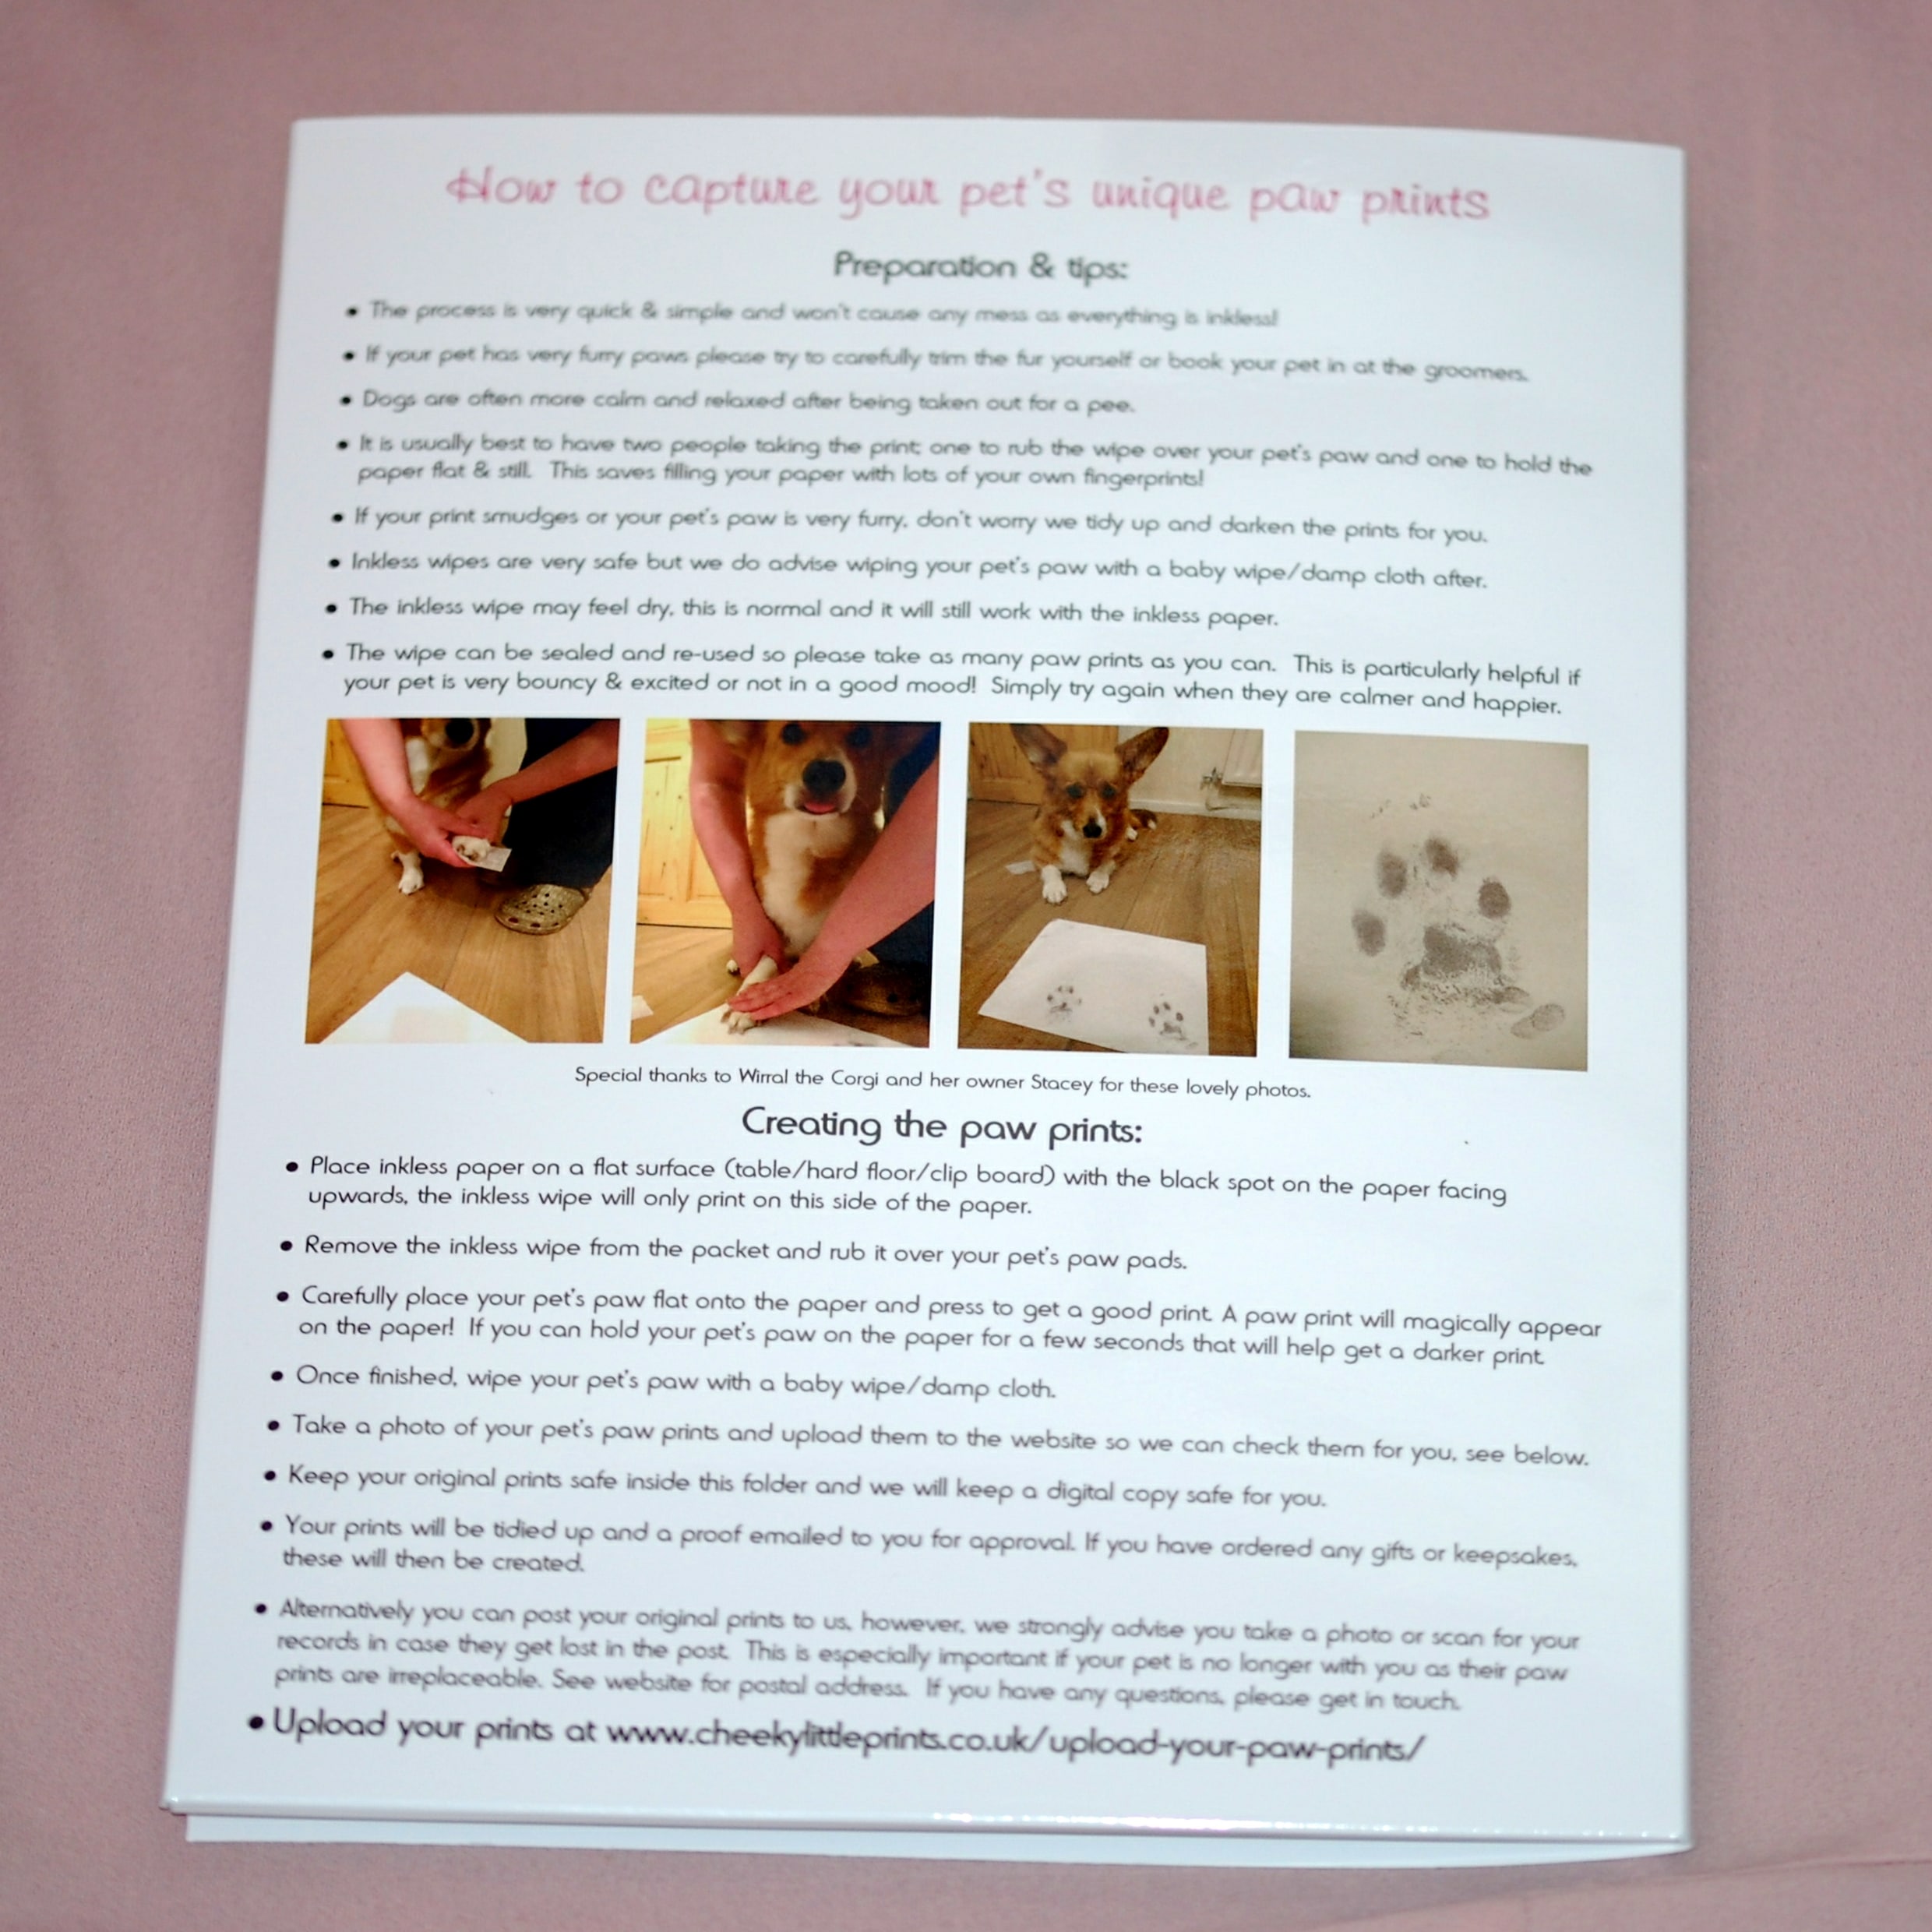 Paw print kit instructions on the back of the presentation folder